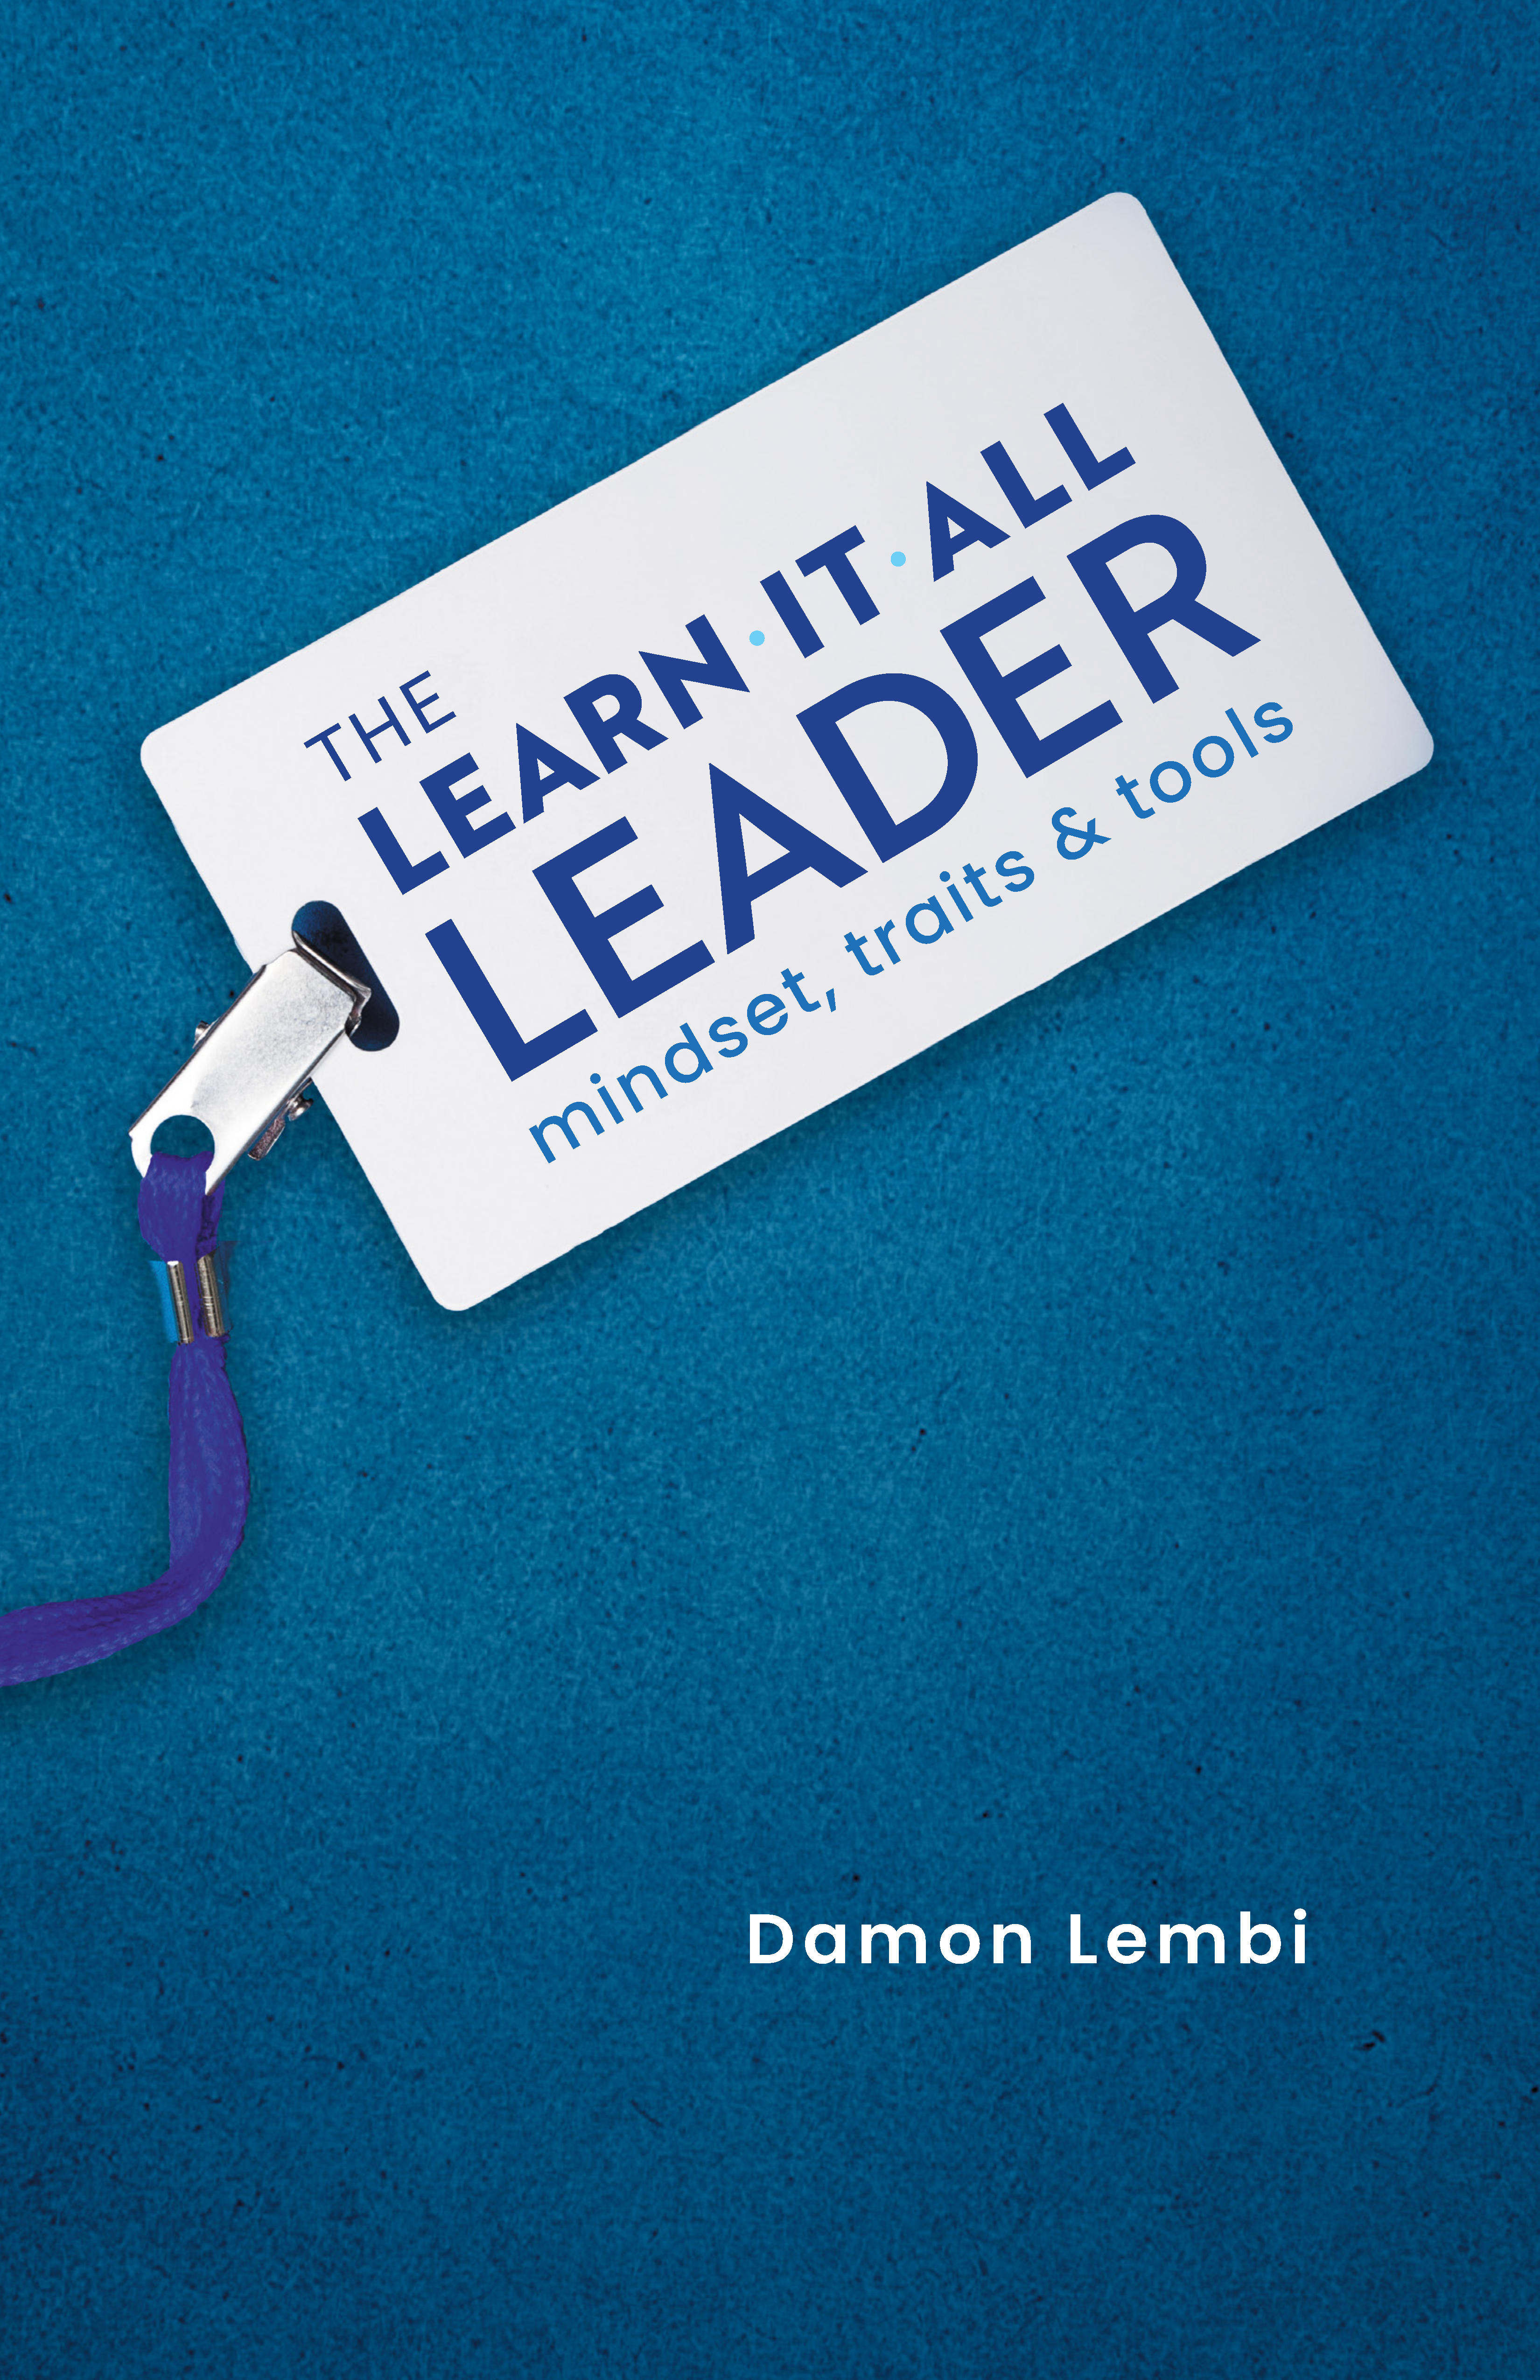 The Learn-It-All Leader by Damon Lembi